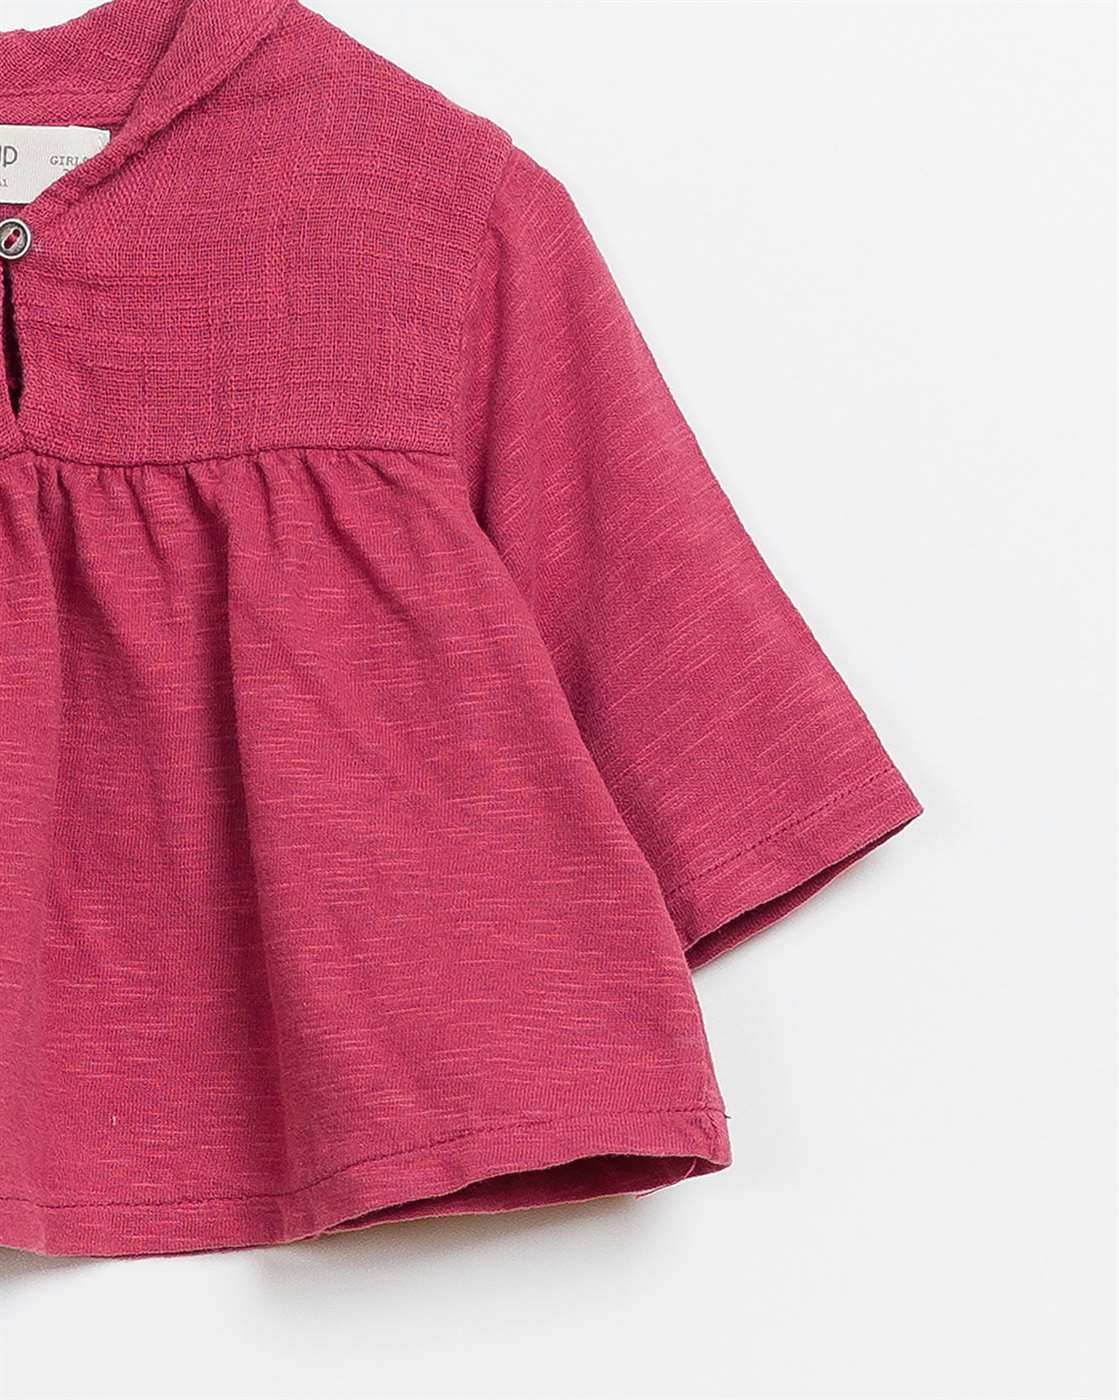 BeeBoo|BeeBoo PlayUp vêtement bébé baby cloth blouse rose pink 2